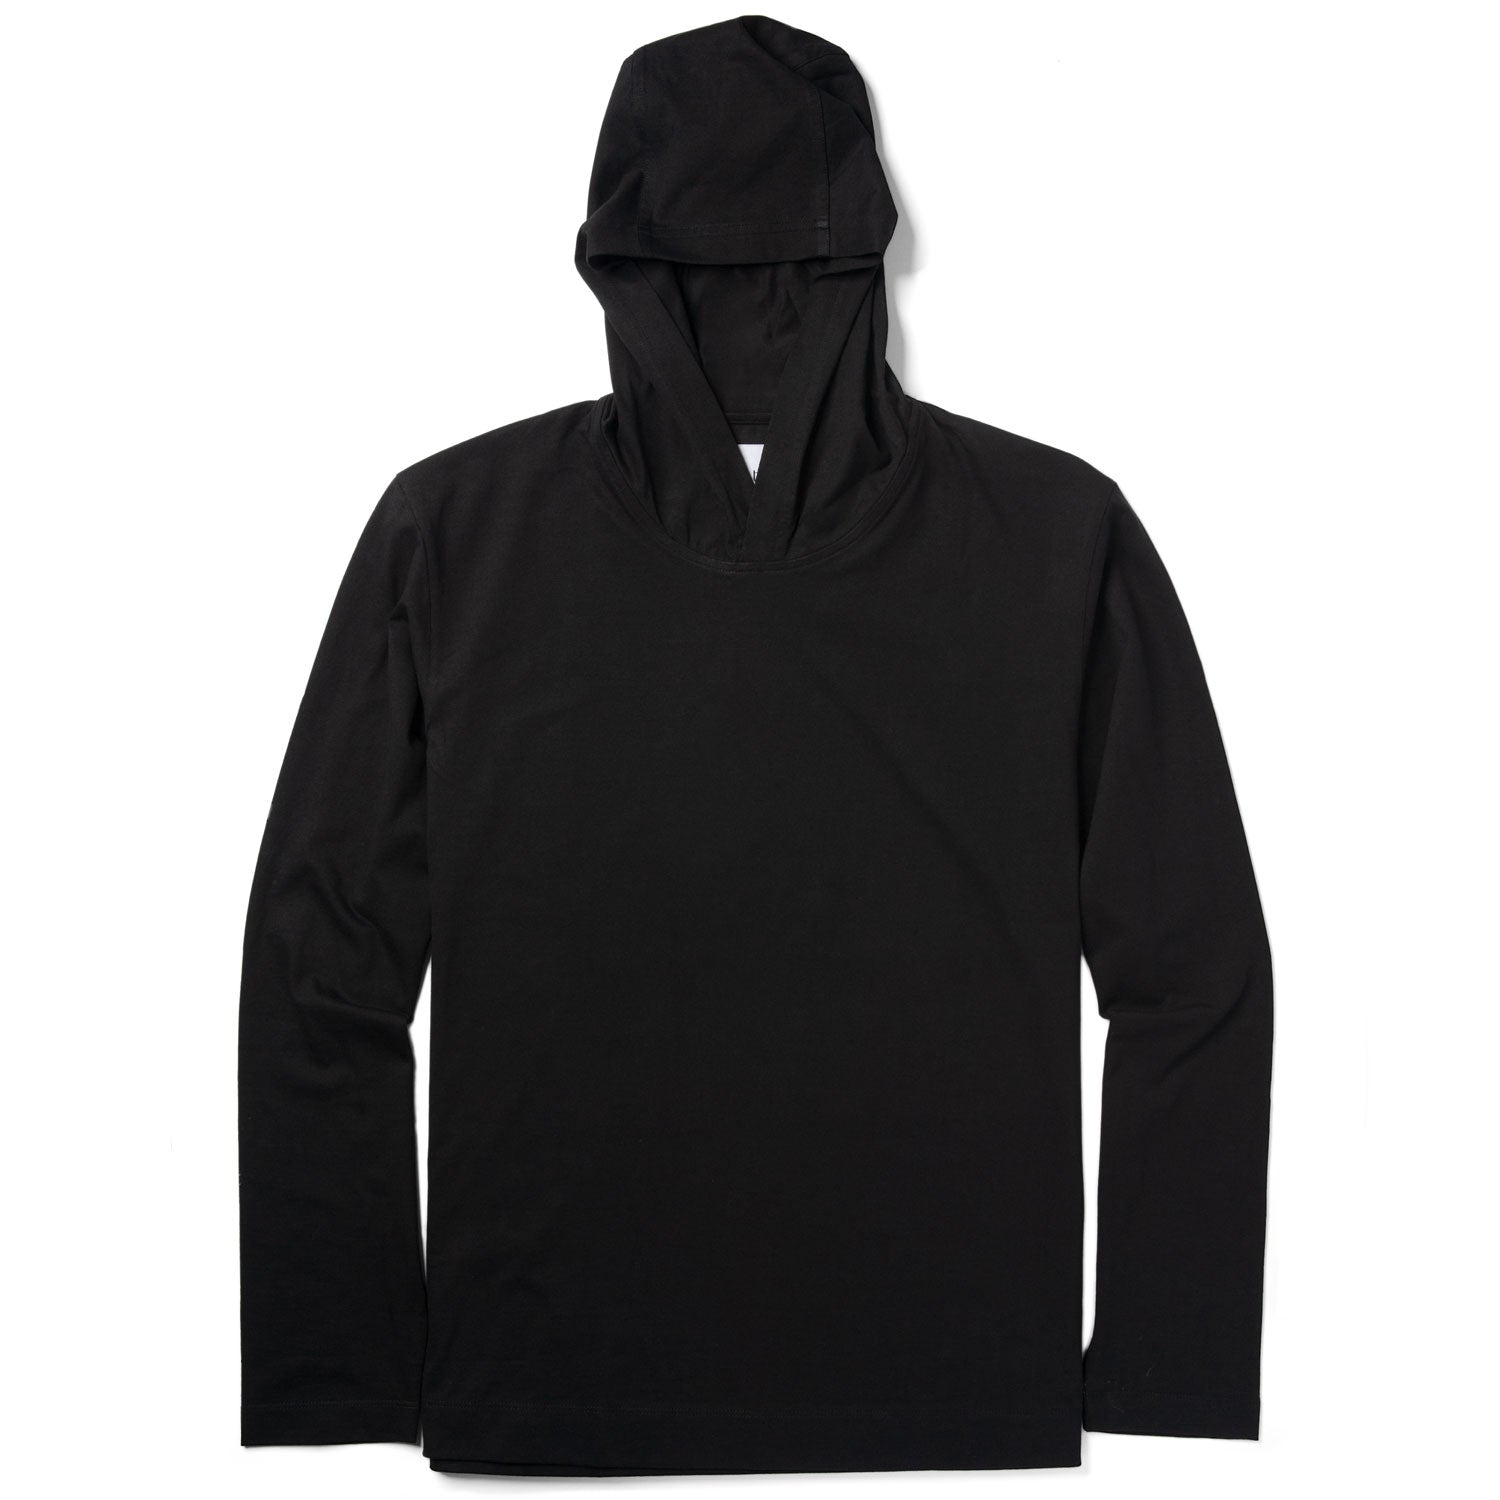 Essential T-Hoodie –  Black Cotton Jersey